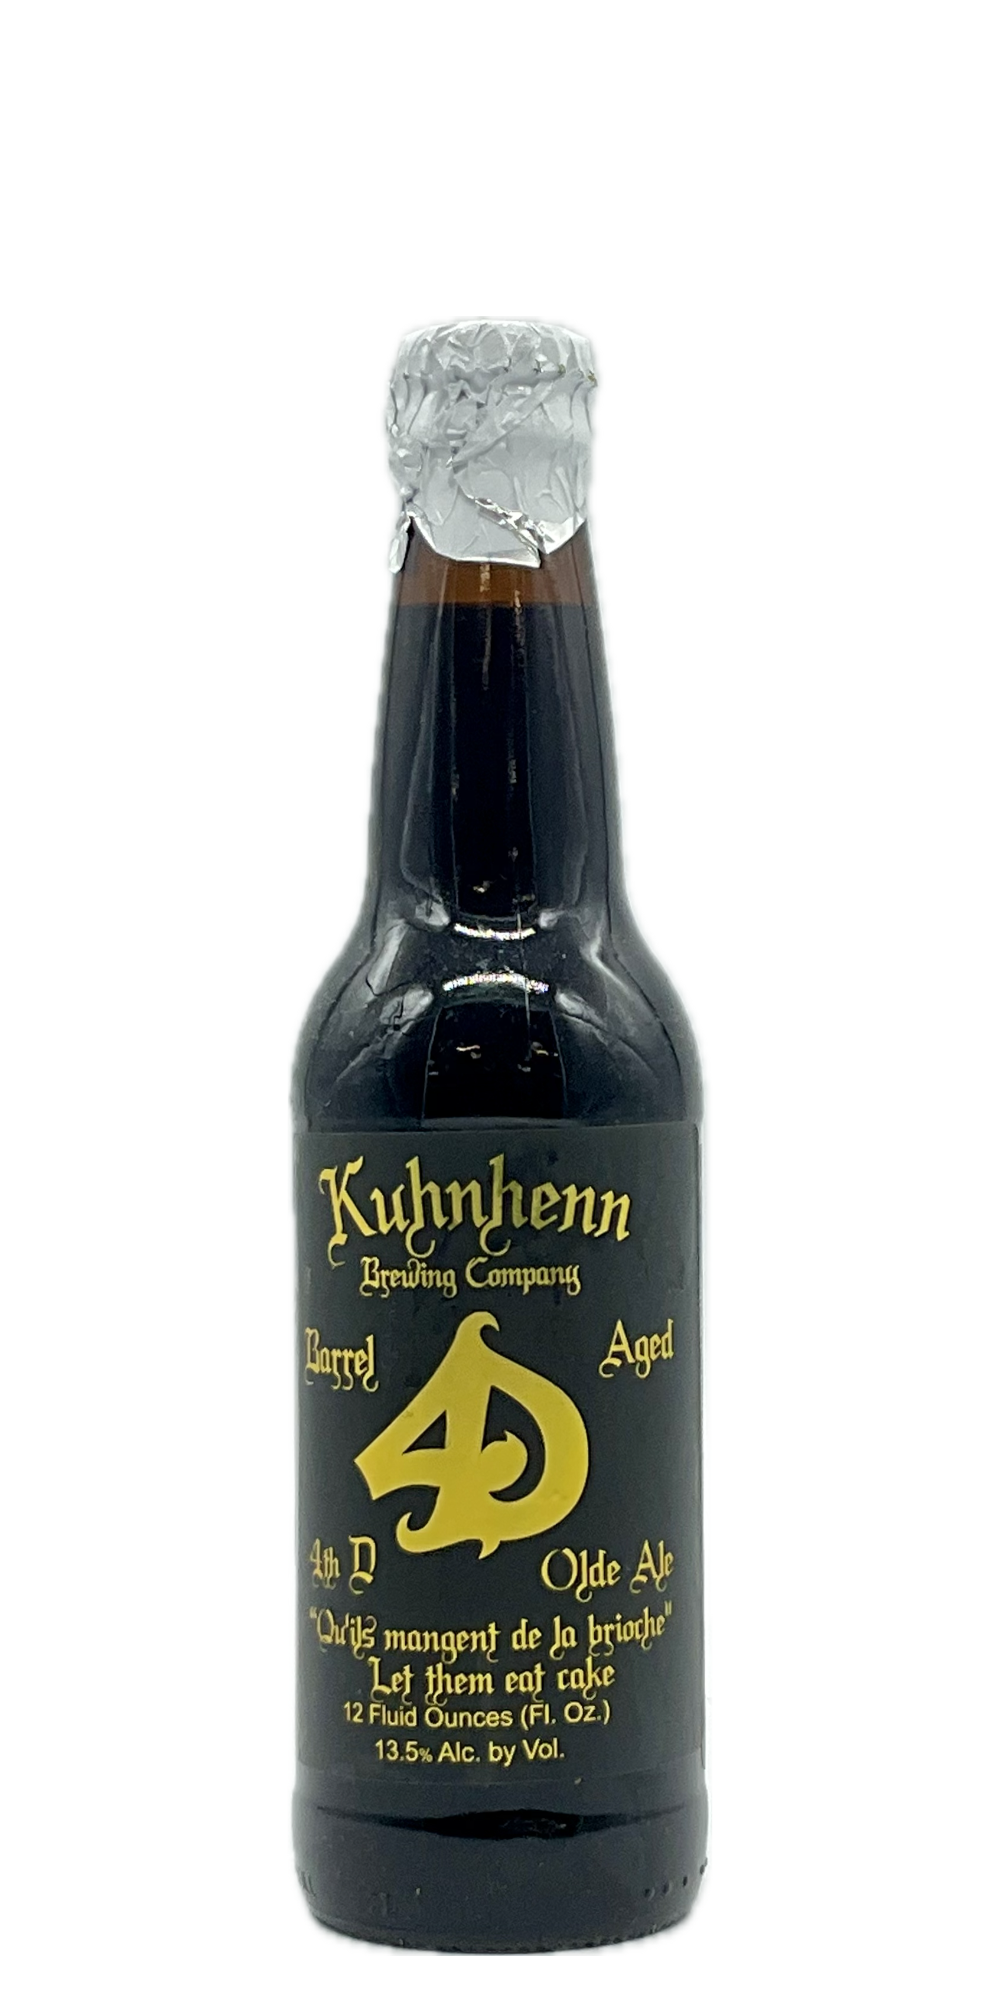 Kuhnhenn - Barrel Aged 4th D Olde Ale "Qu'ils mangent de la brioche" (2022)